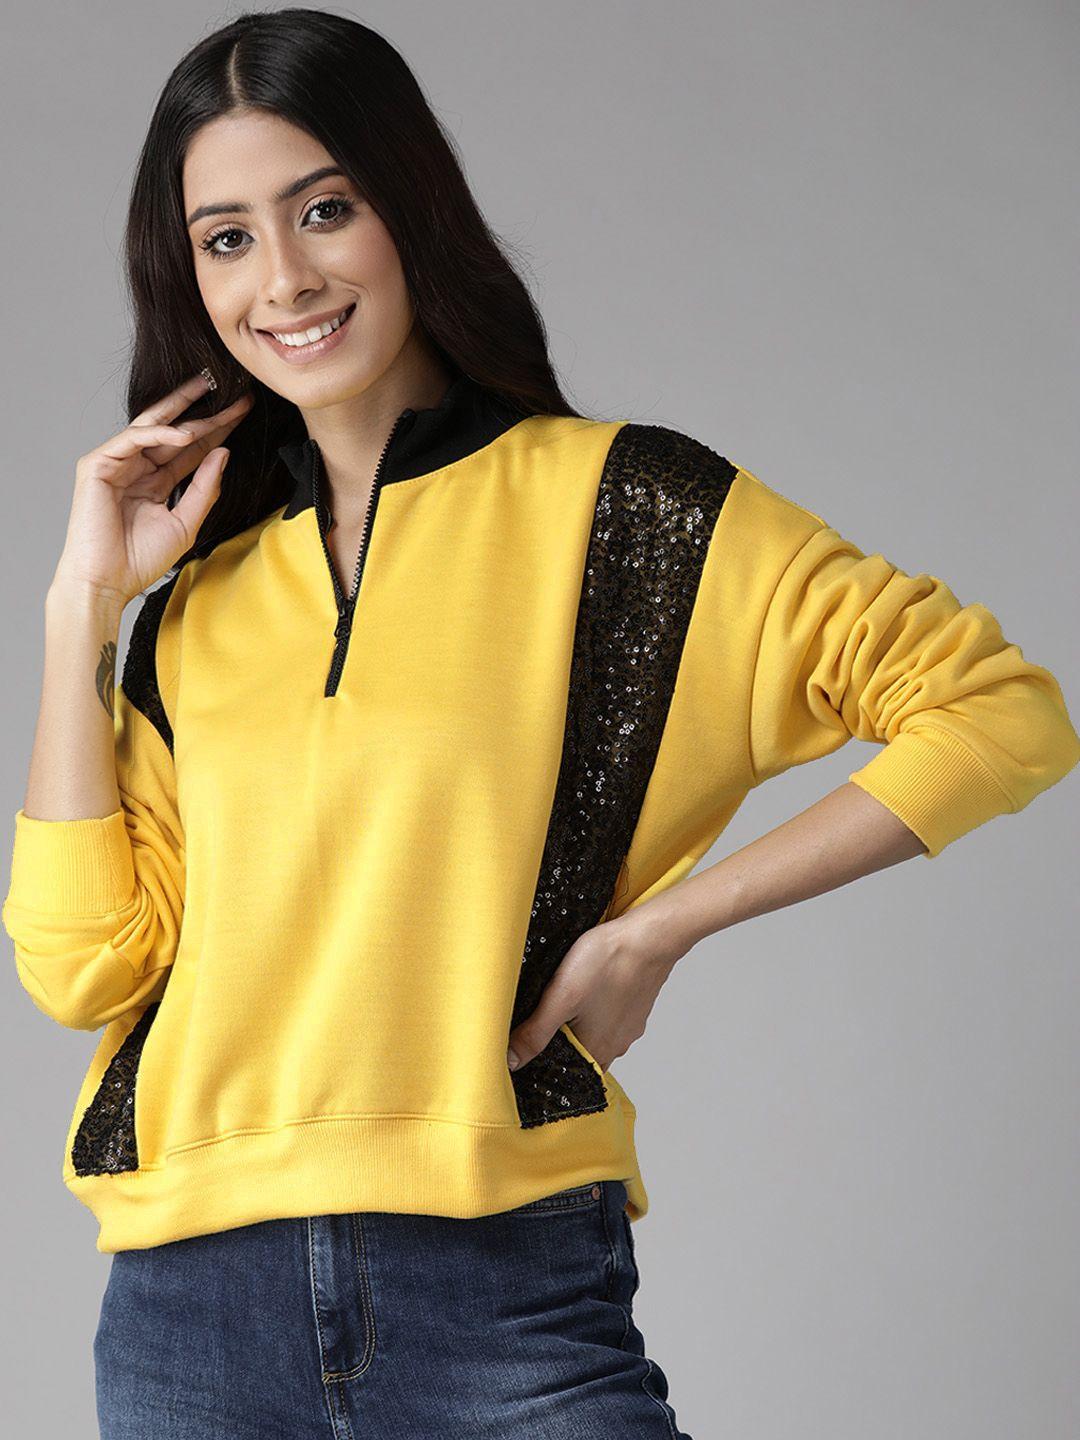 kassually-women-yellow-&-black-solid-sequined-sweatshirt